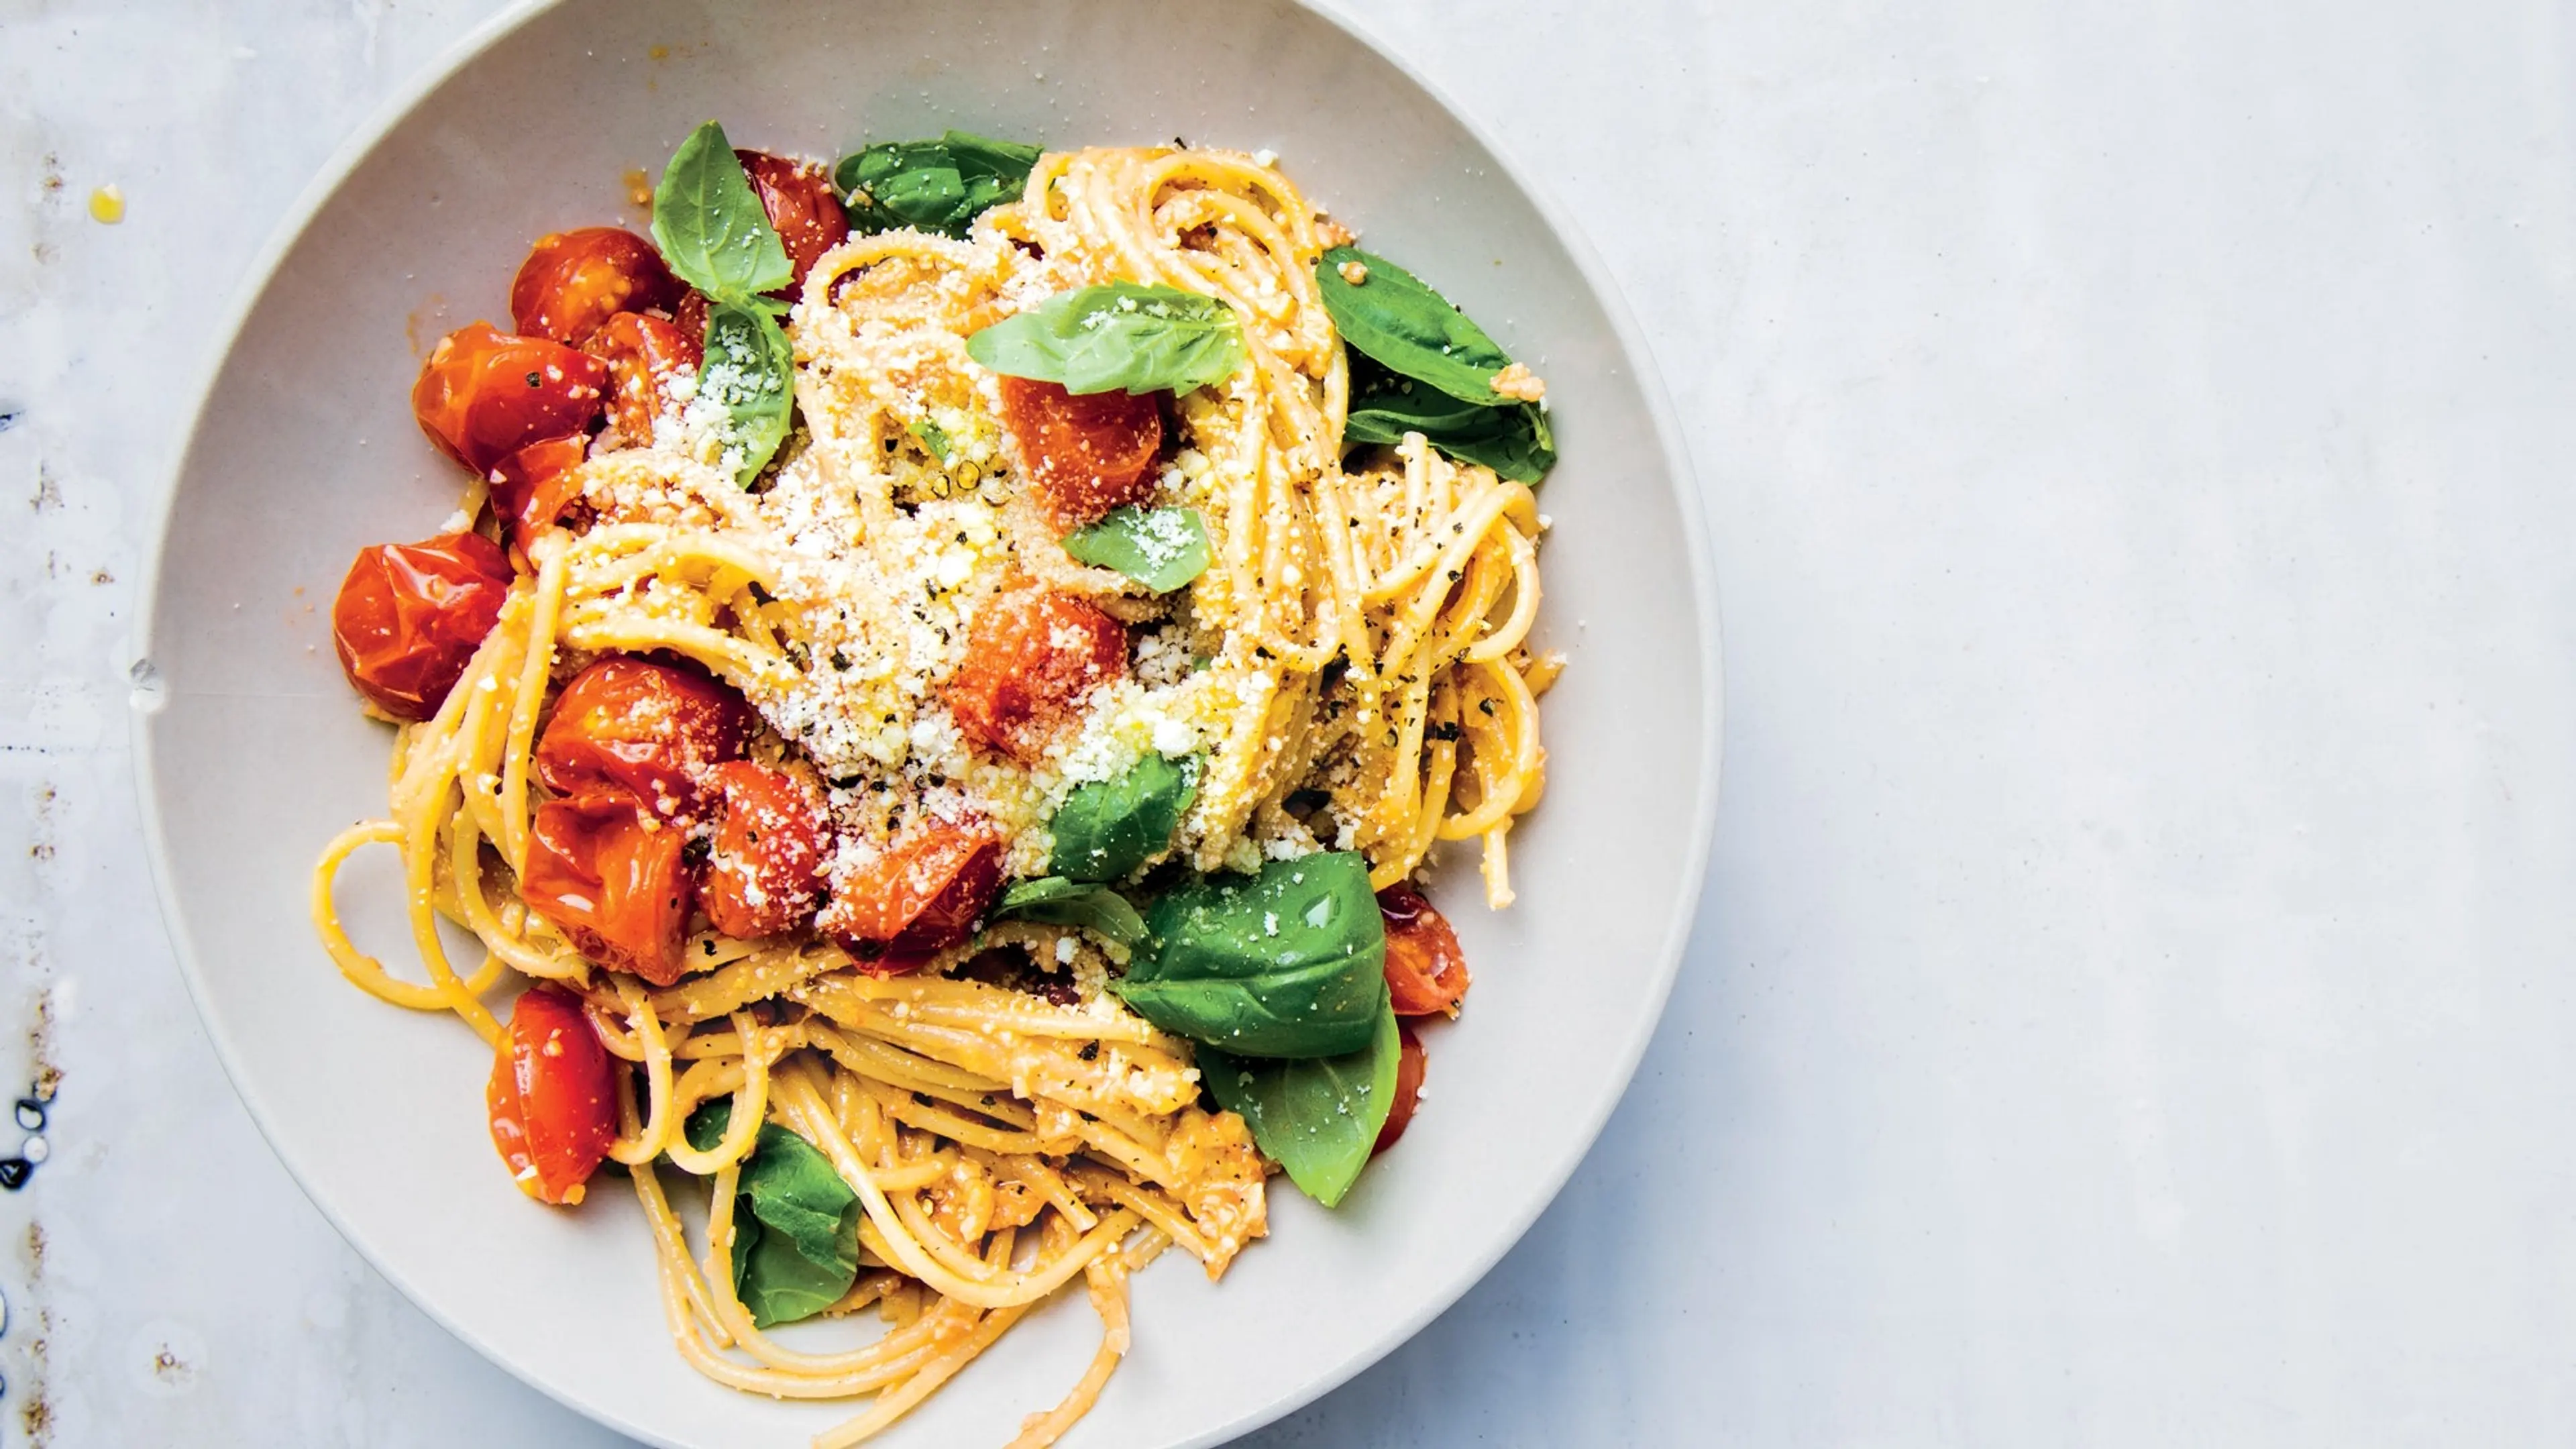 Spaghetti with Tomato and Walnut Pesto